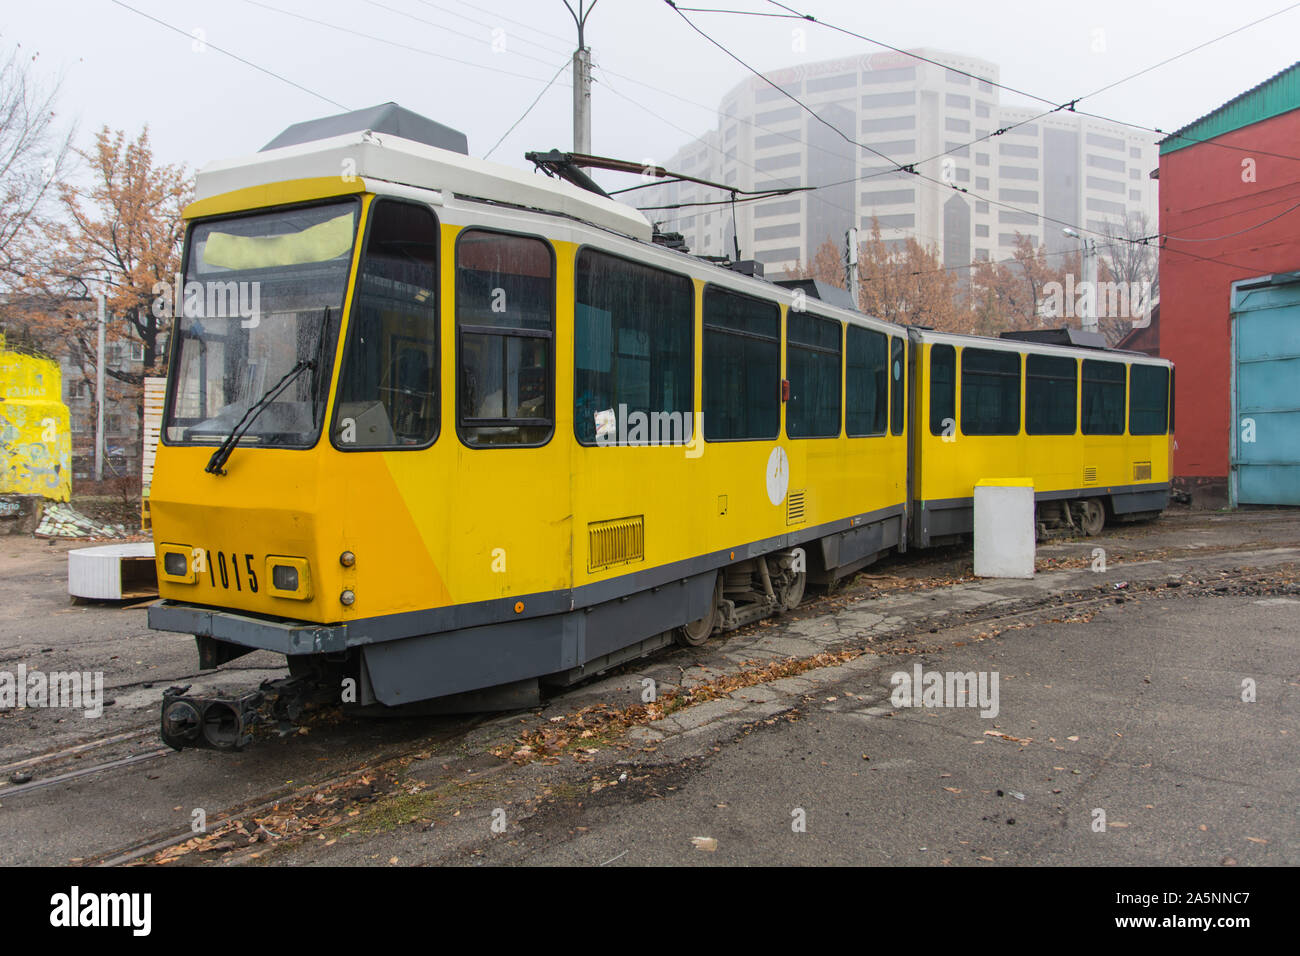 Tram on the rails (yellow, depo, tramway) Stock Photo